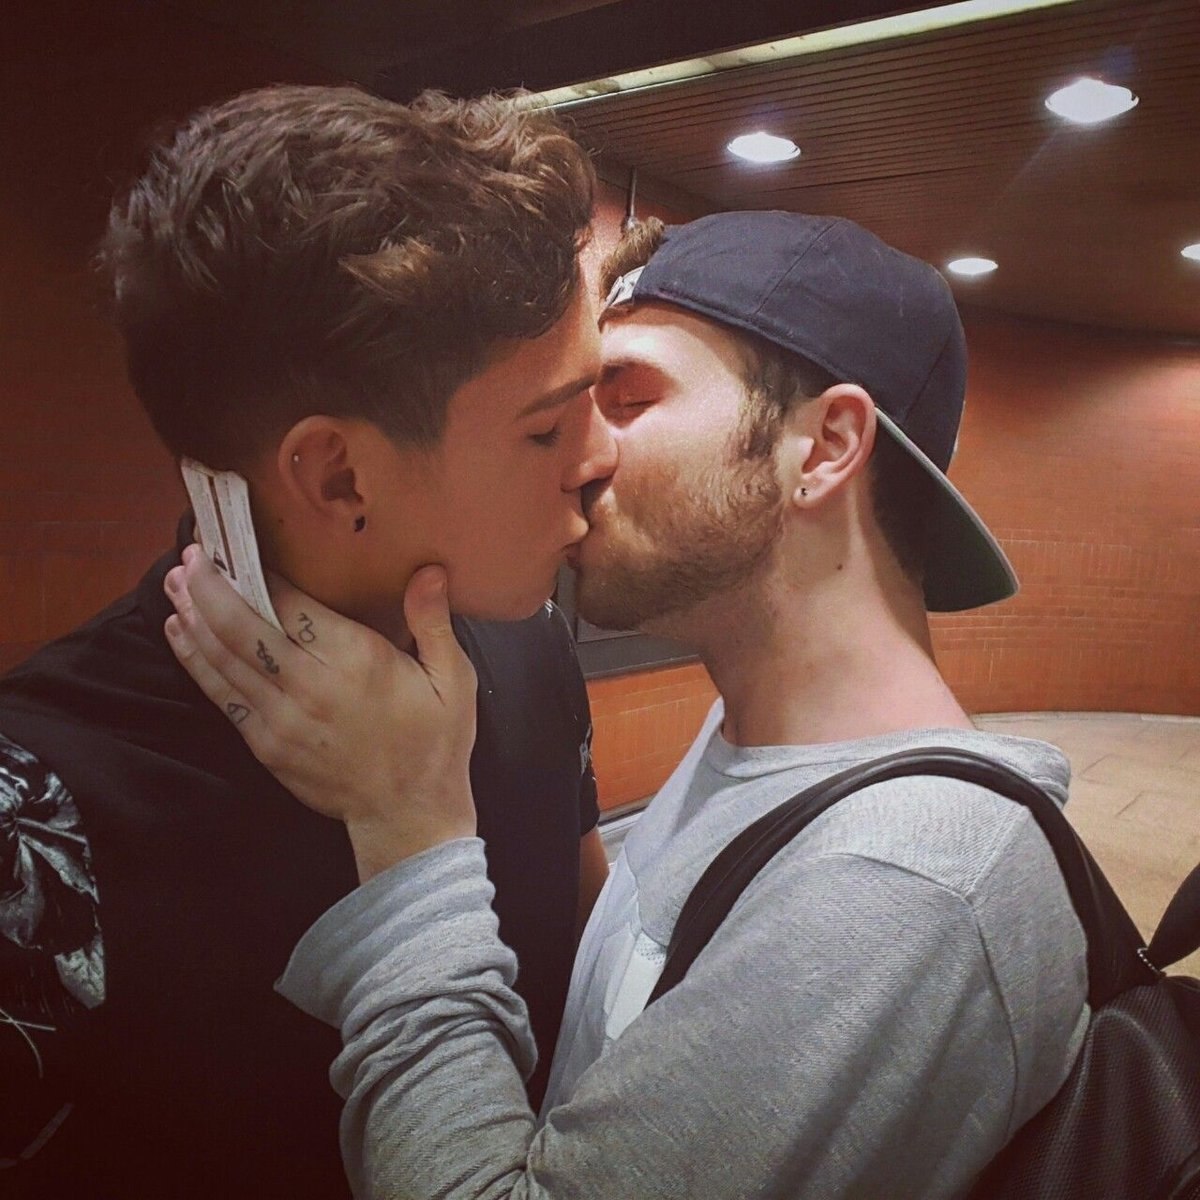 геи мальчики целуются фото фото 30